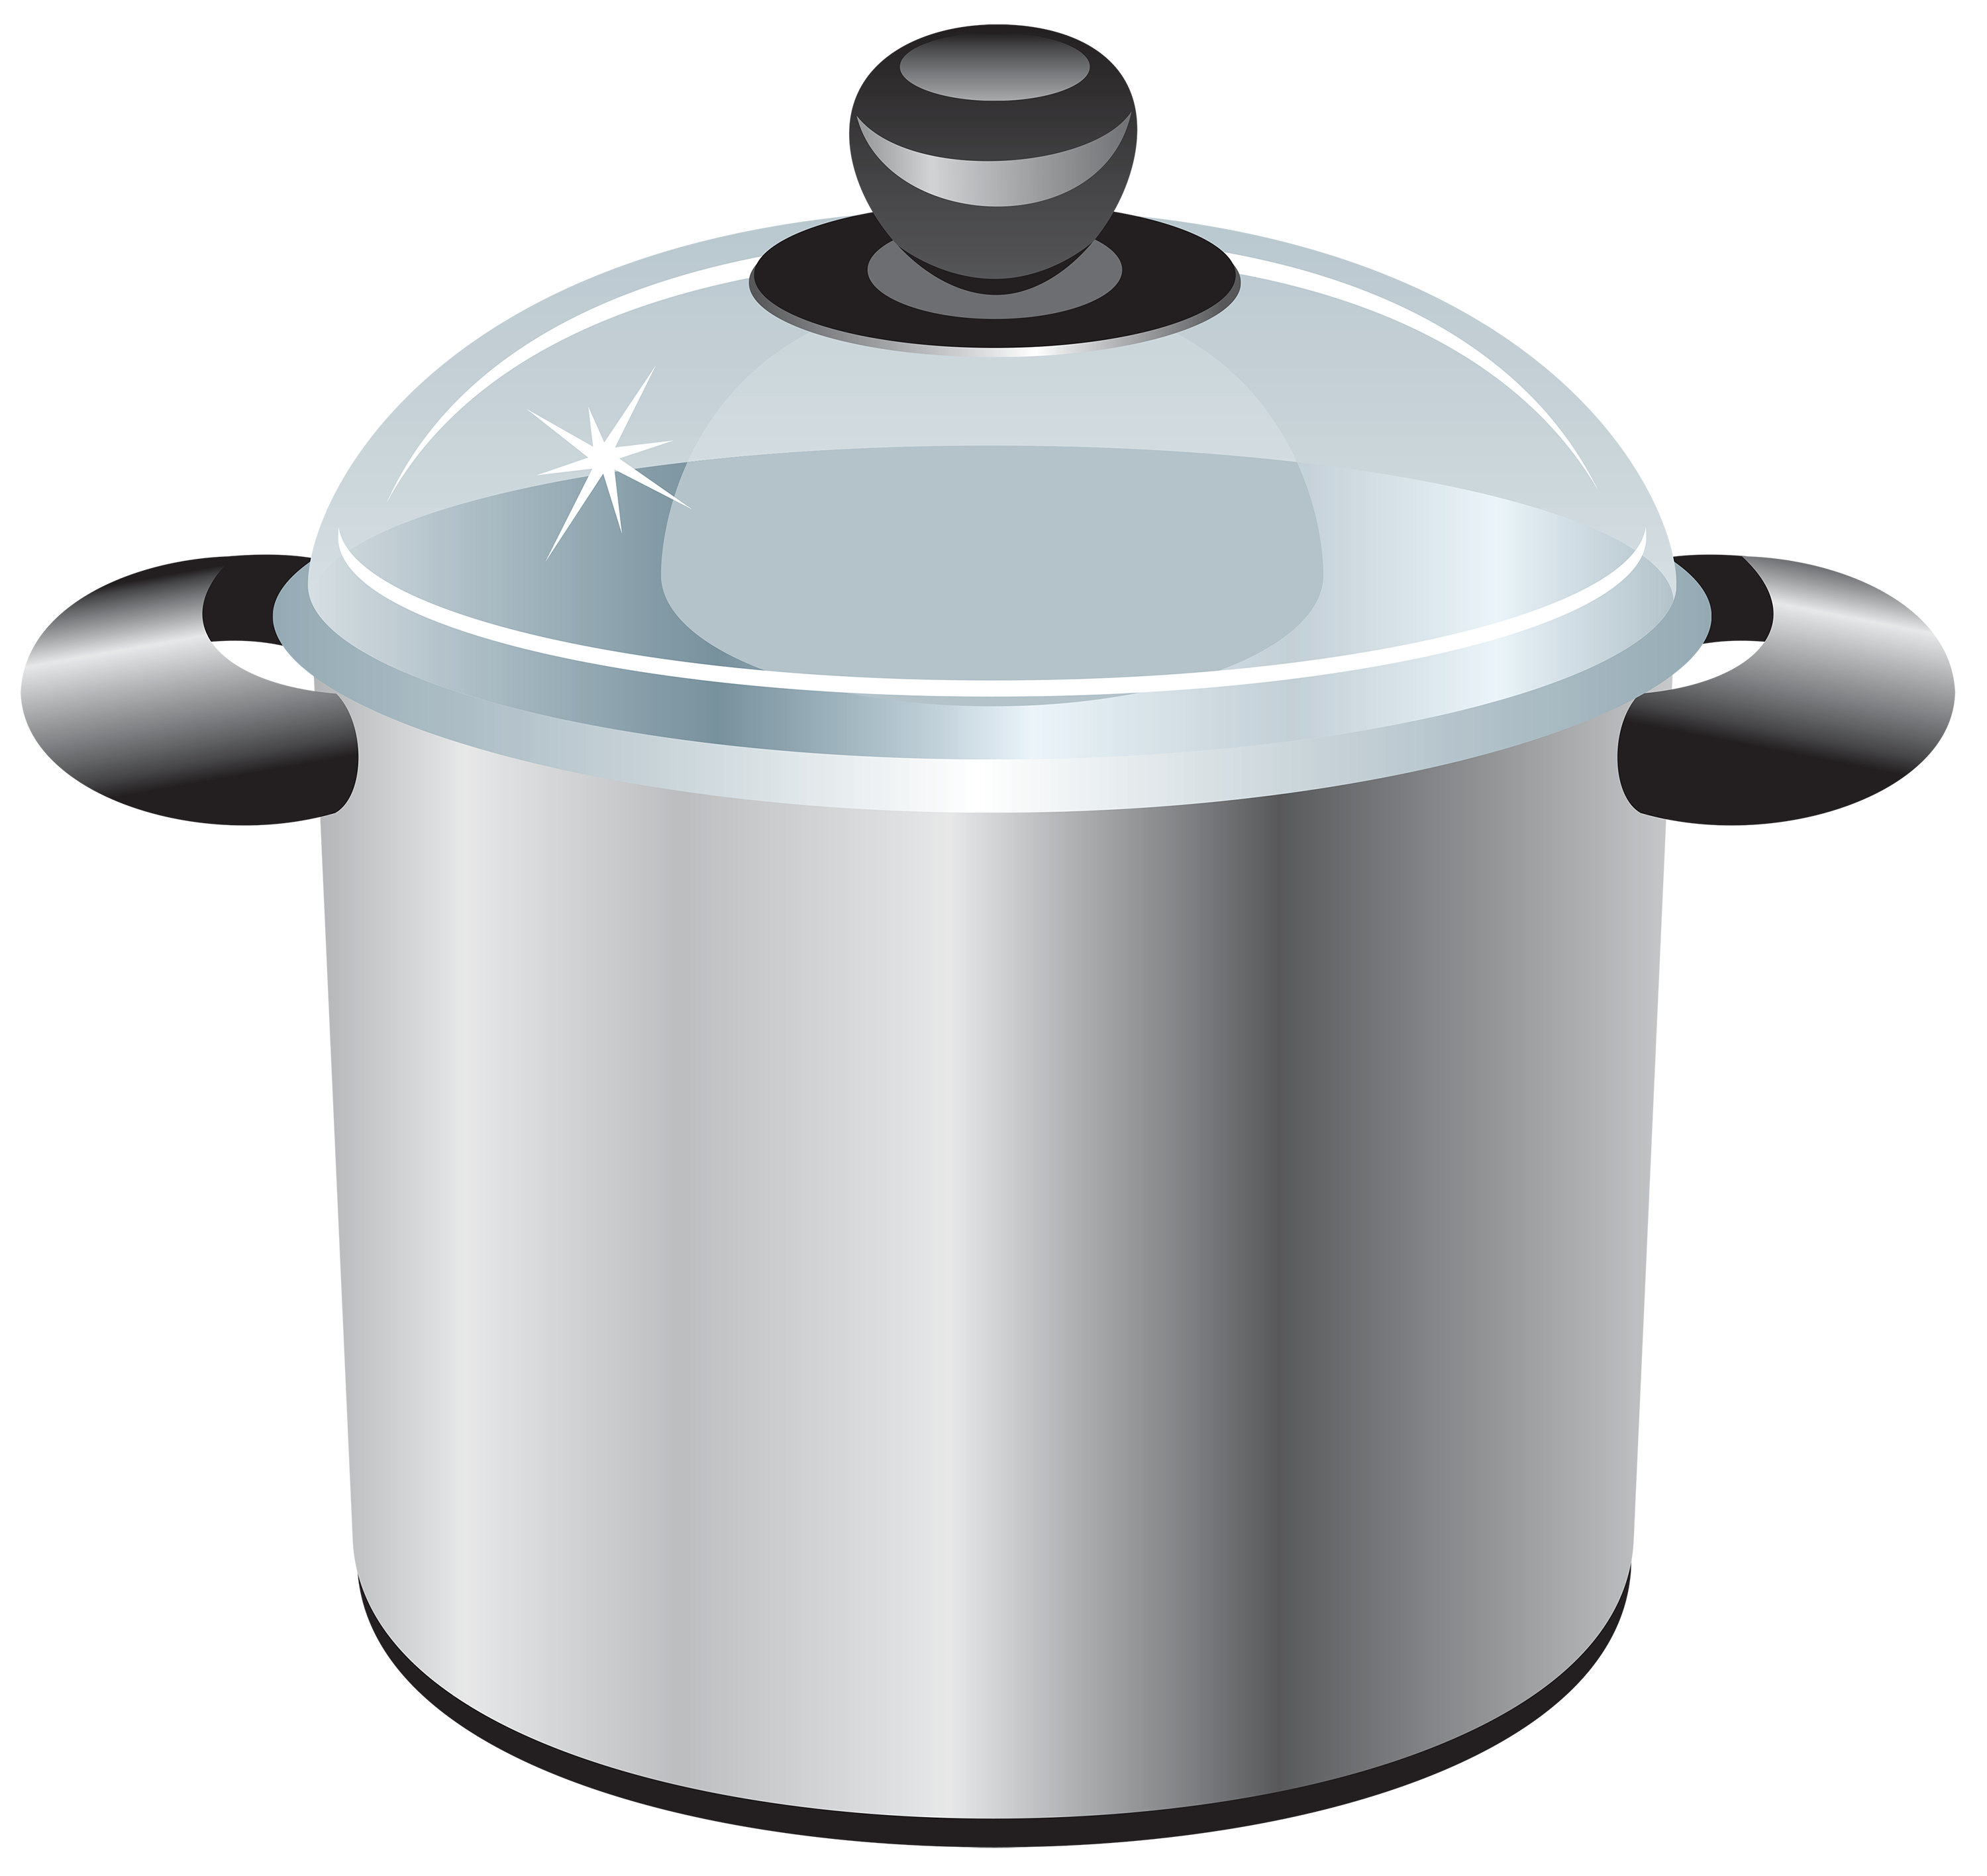 Silver cooking pot clipart we - Pot Clipart